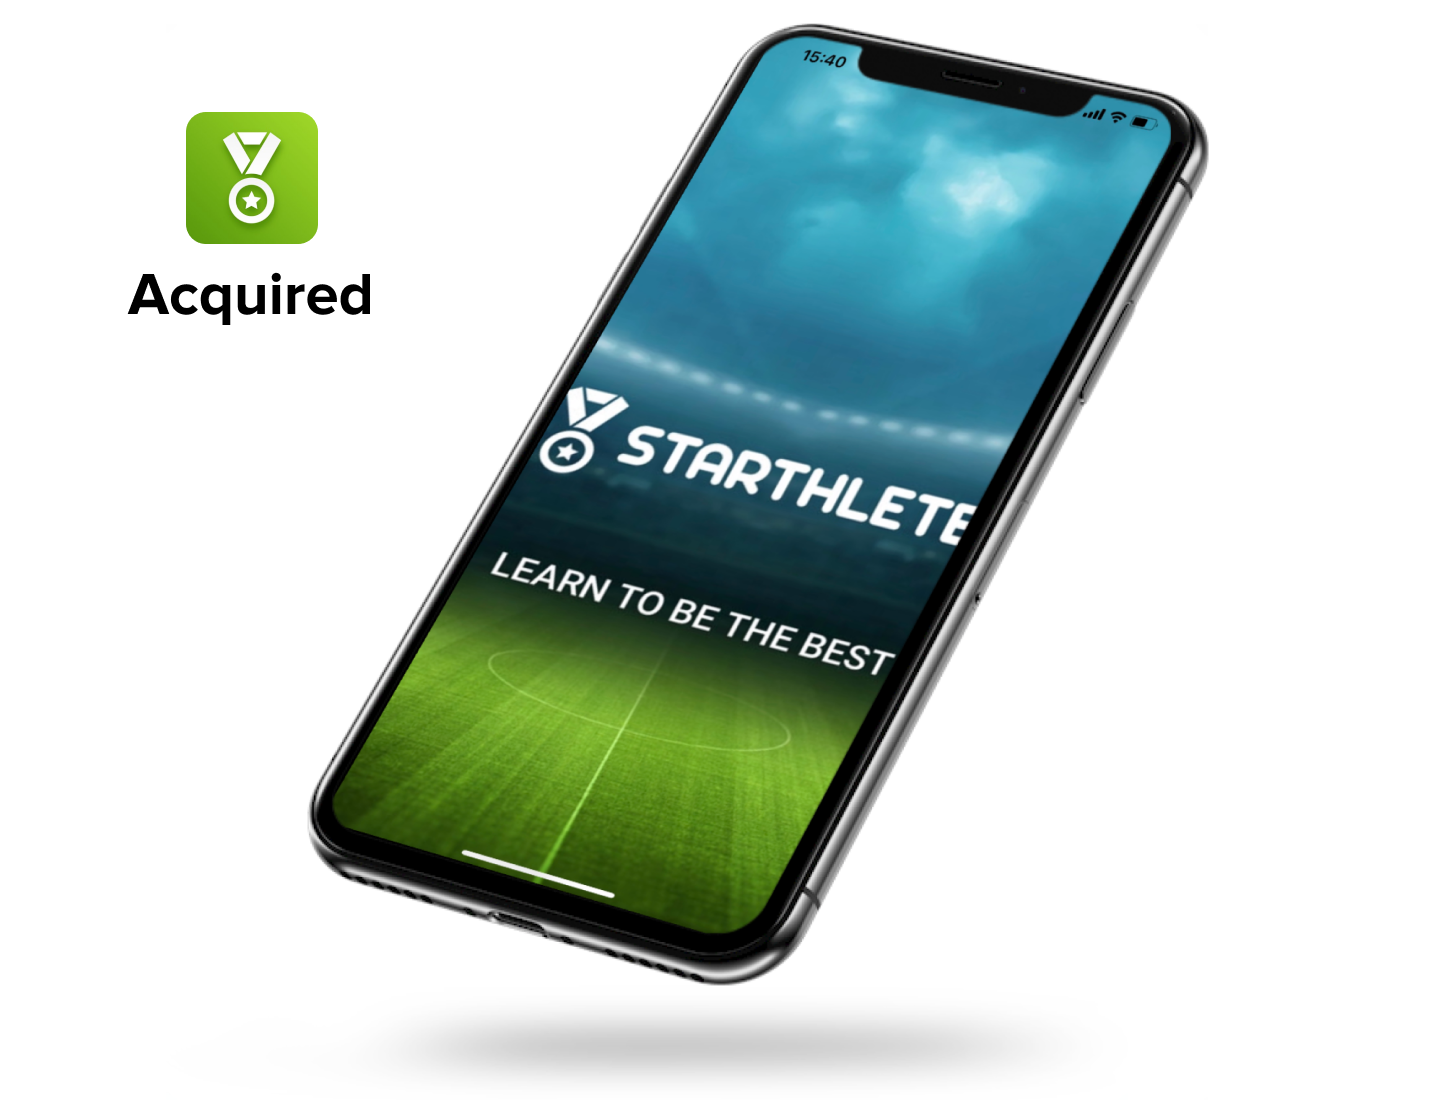 Starthlete mobile app splash screen screenshot and Skillmasters.io acquisition logo